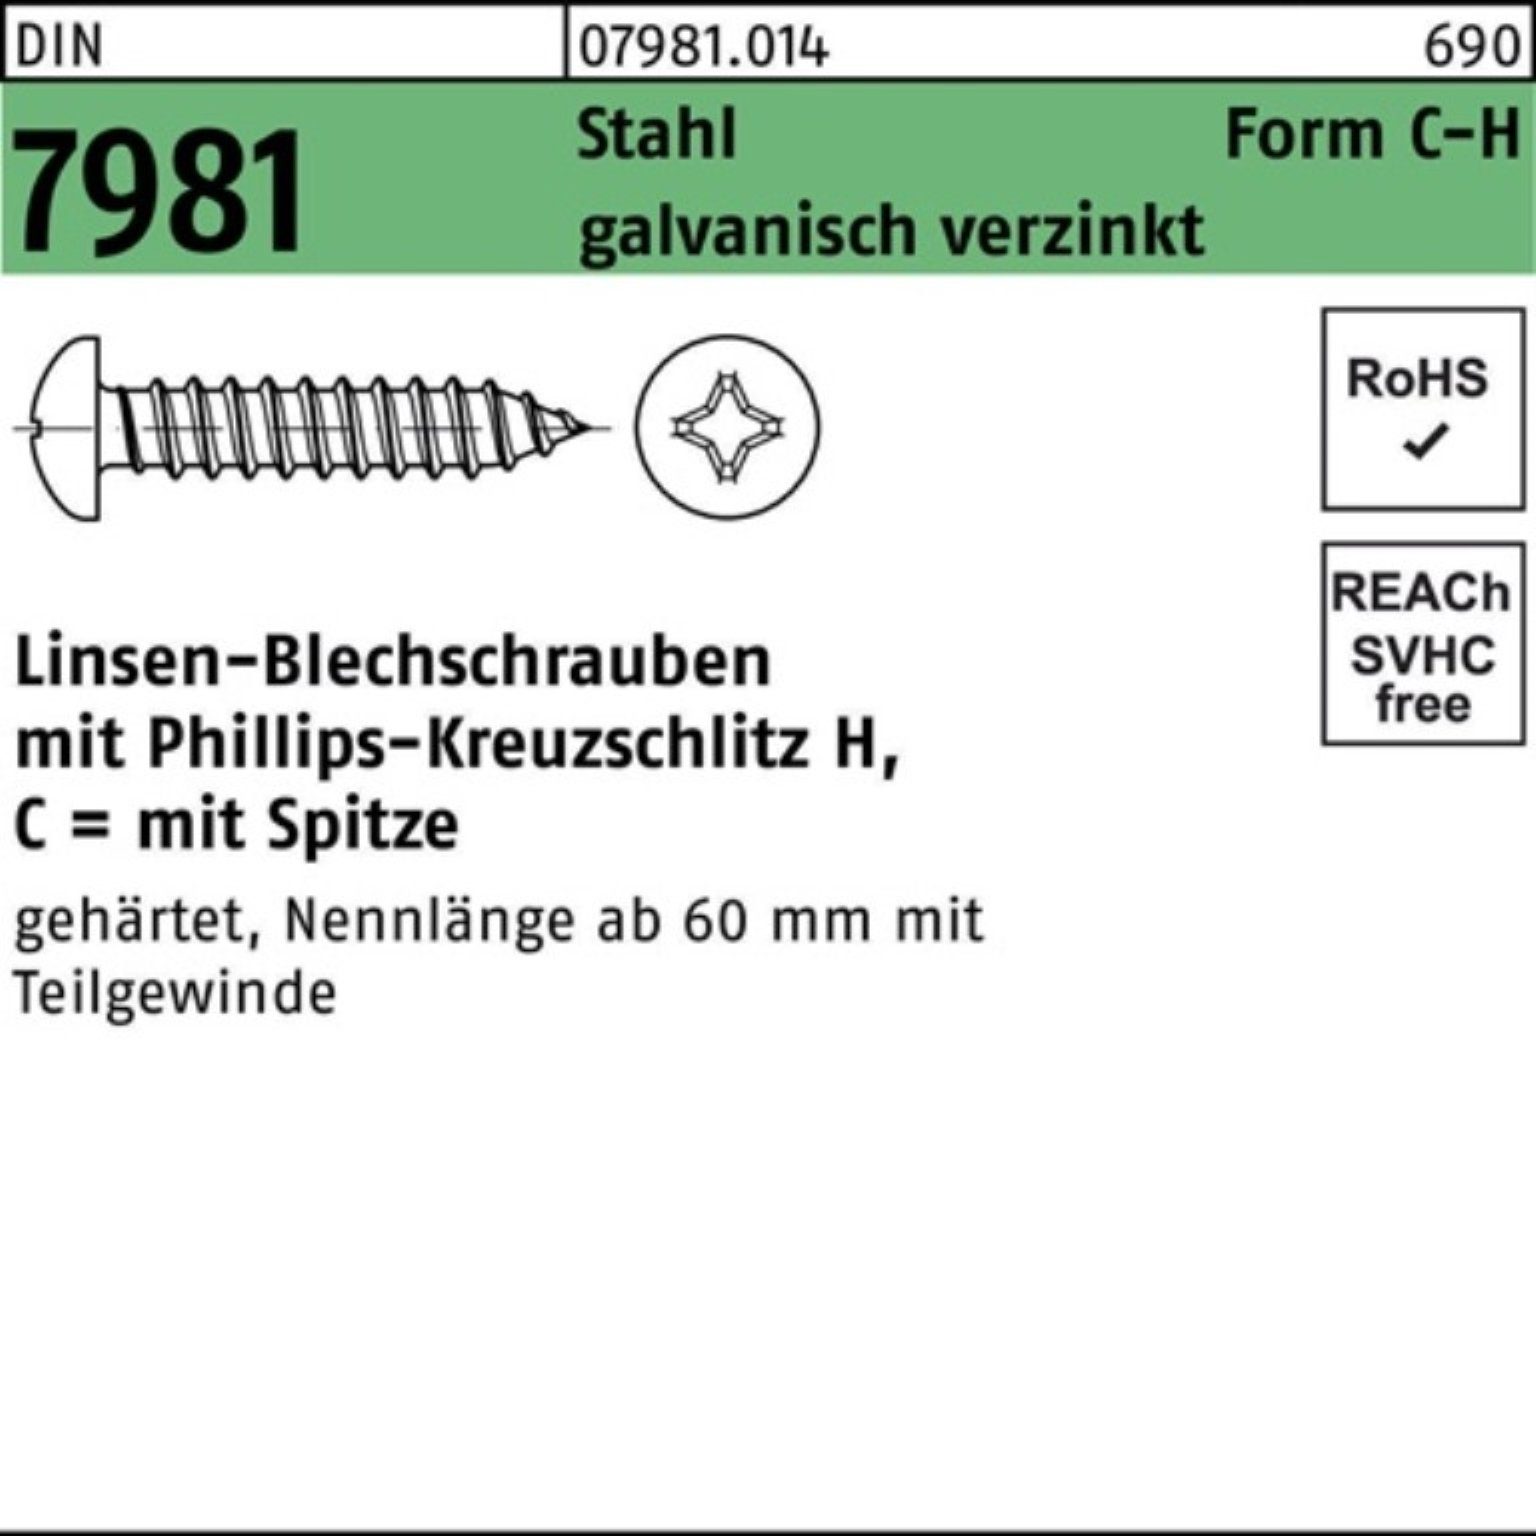 Reyher Blechschraube 100er Pack C6,3x19-H LIKO Stahl Blechschraube S 7981 DIN galv.verz. PH